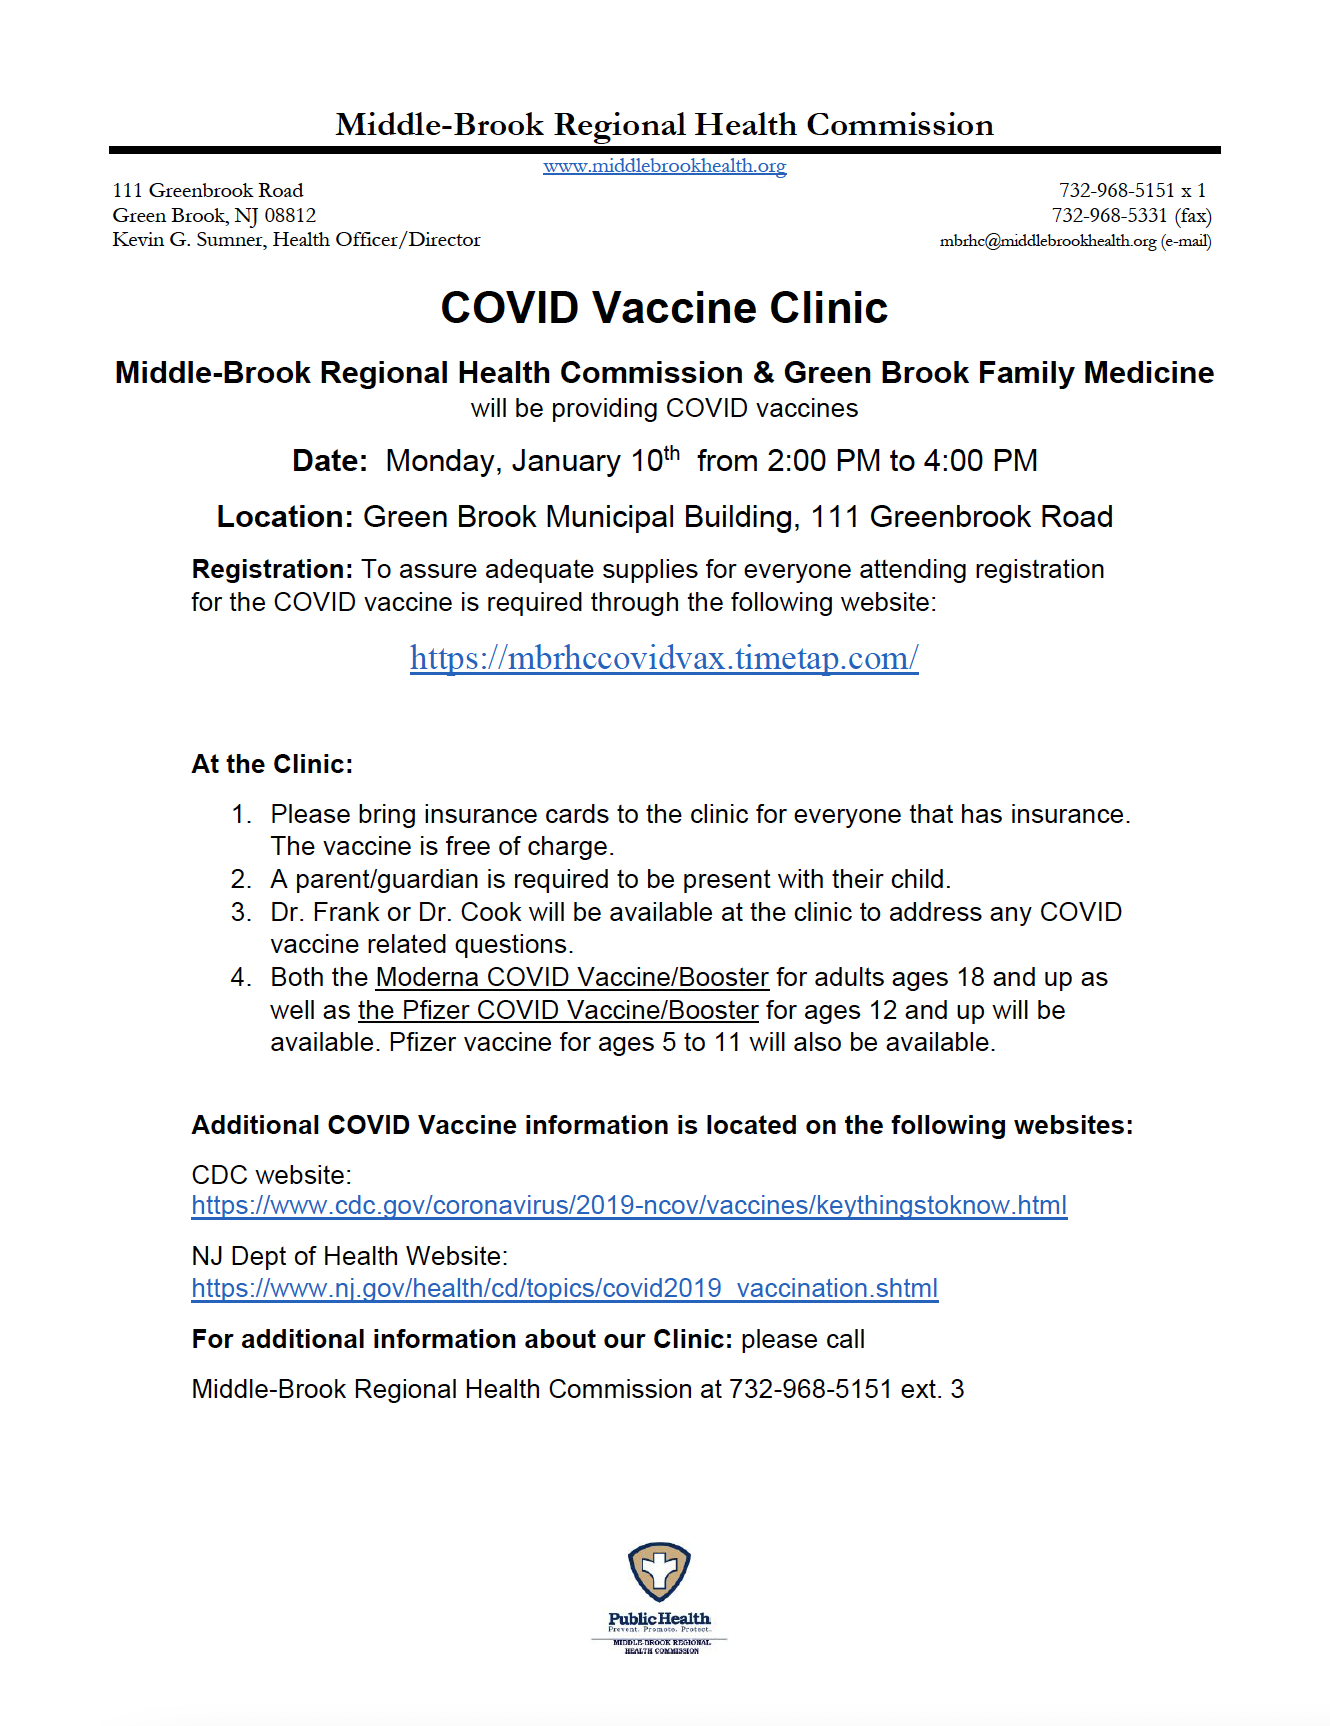 COVID Vaccine Clinic Flyer